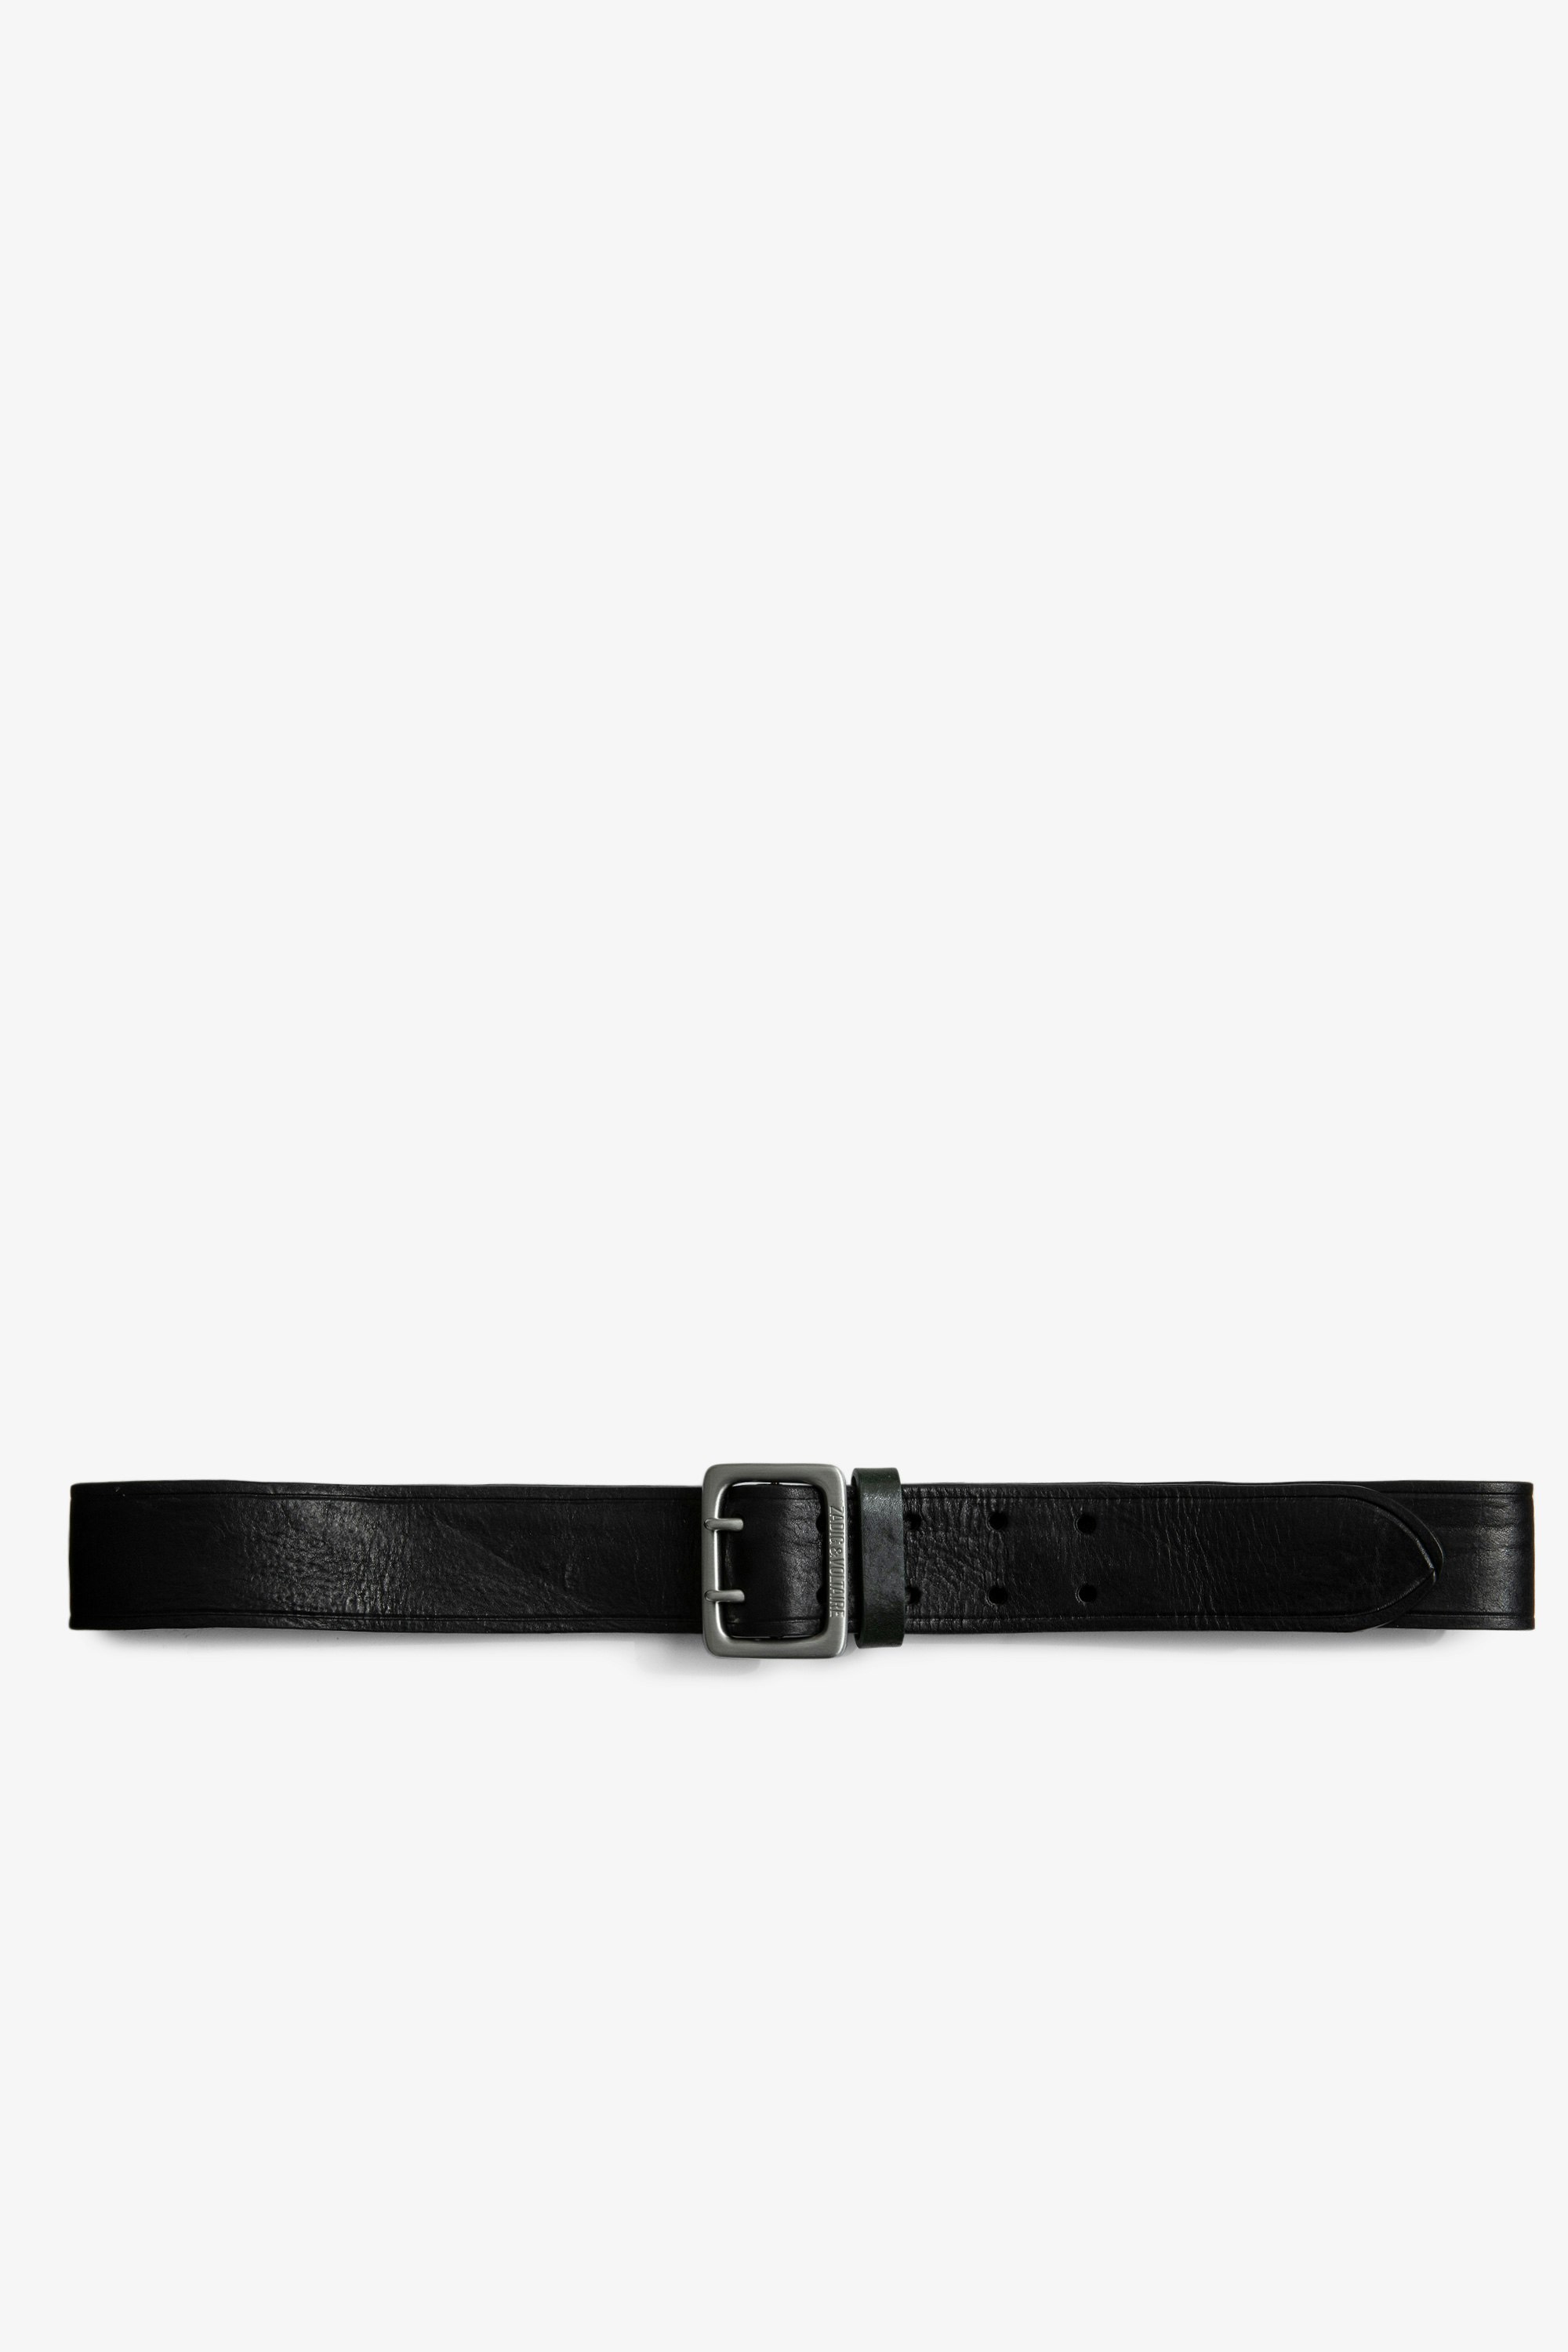 Buckley Belt Leather - Men's black leather belt with silver buckle